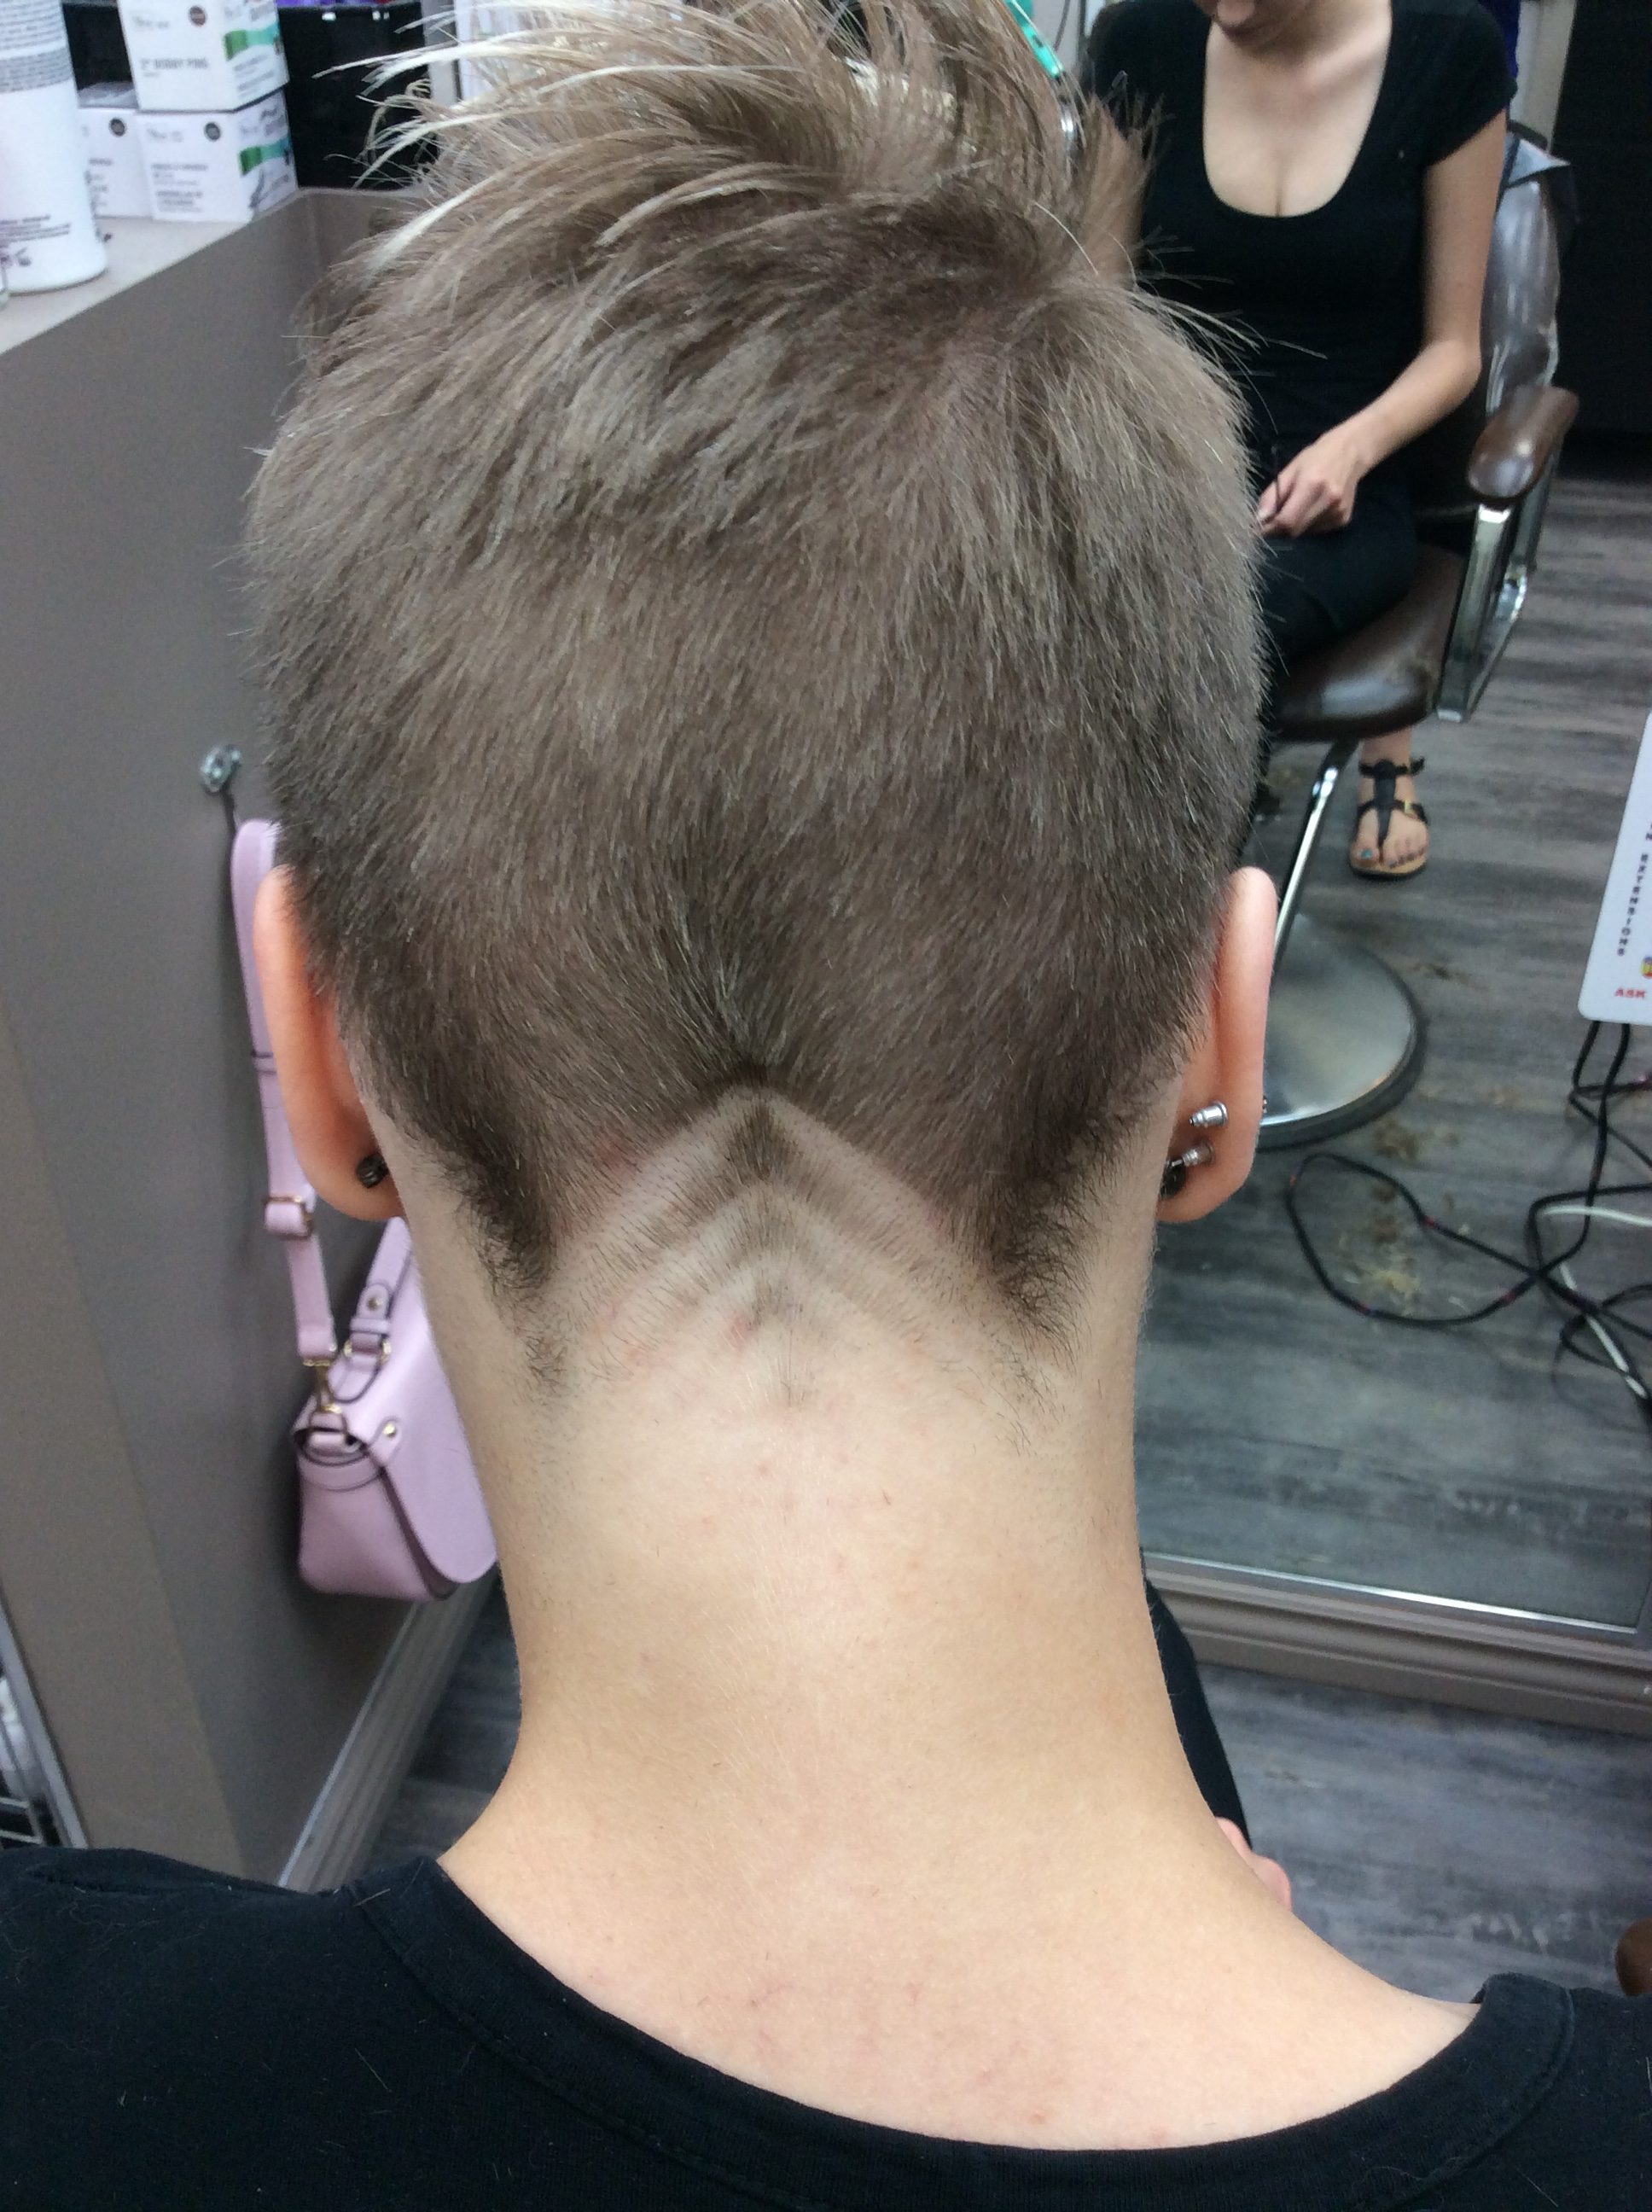 patterns on shaved head Saskatoon